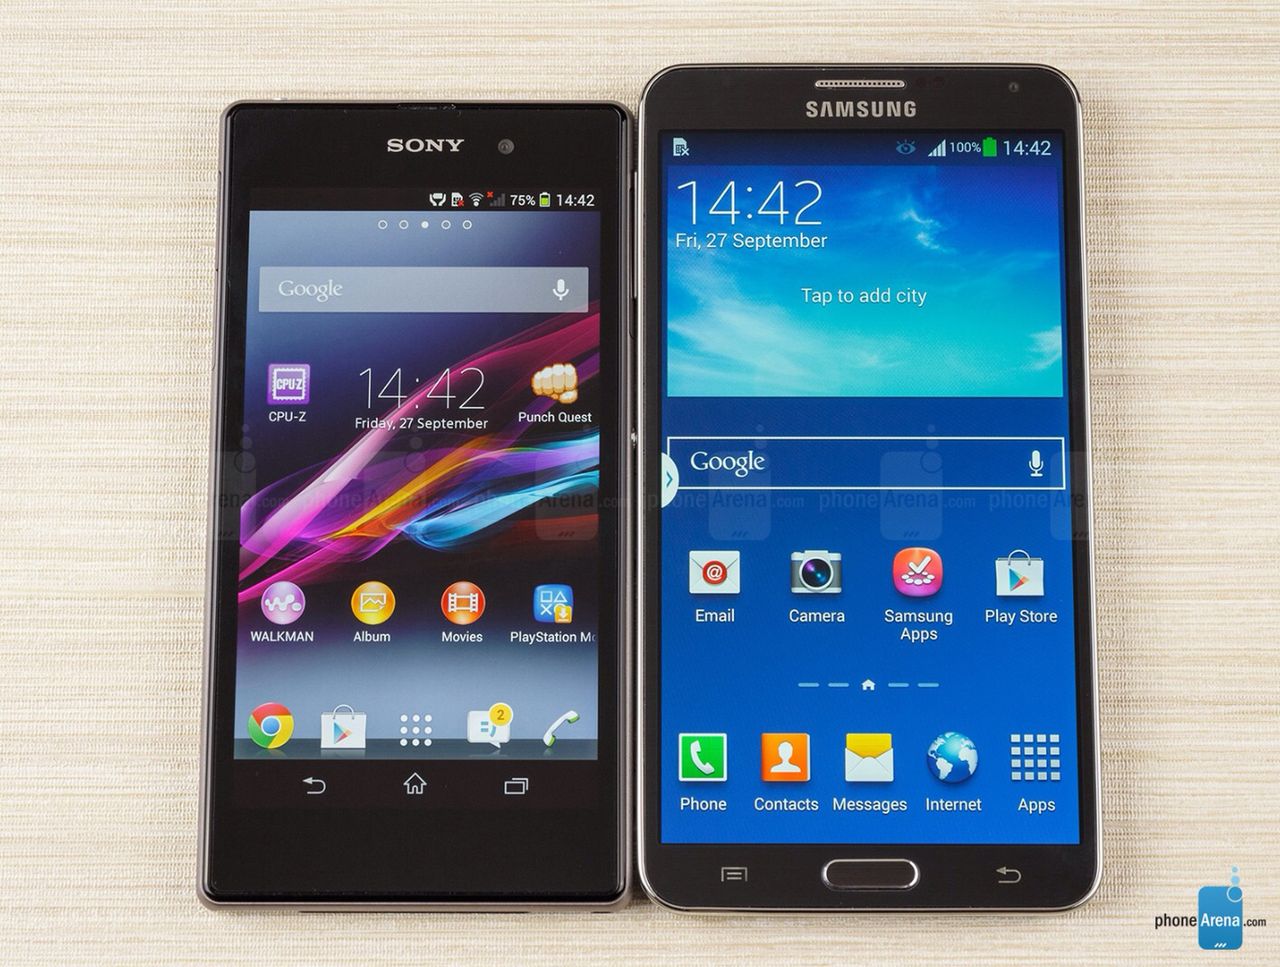 Sony Xperia Z1 obok Samsunga Galaxy Note 3